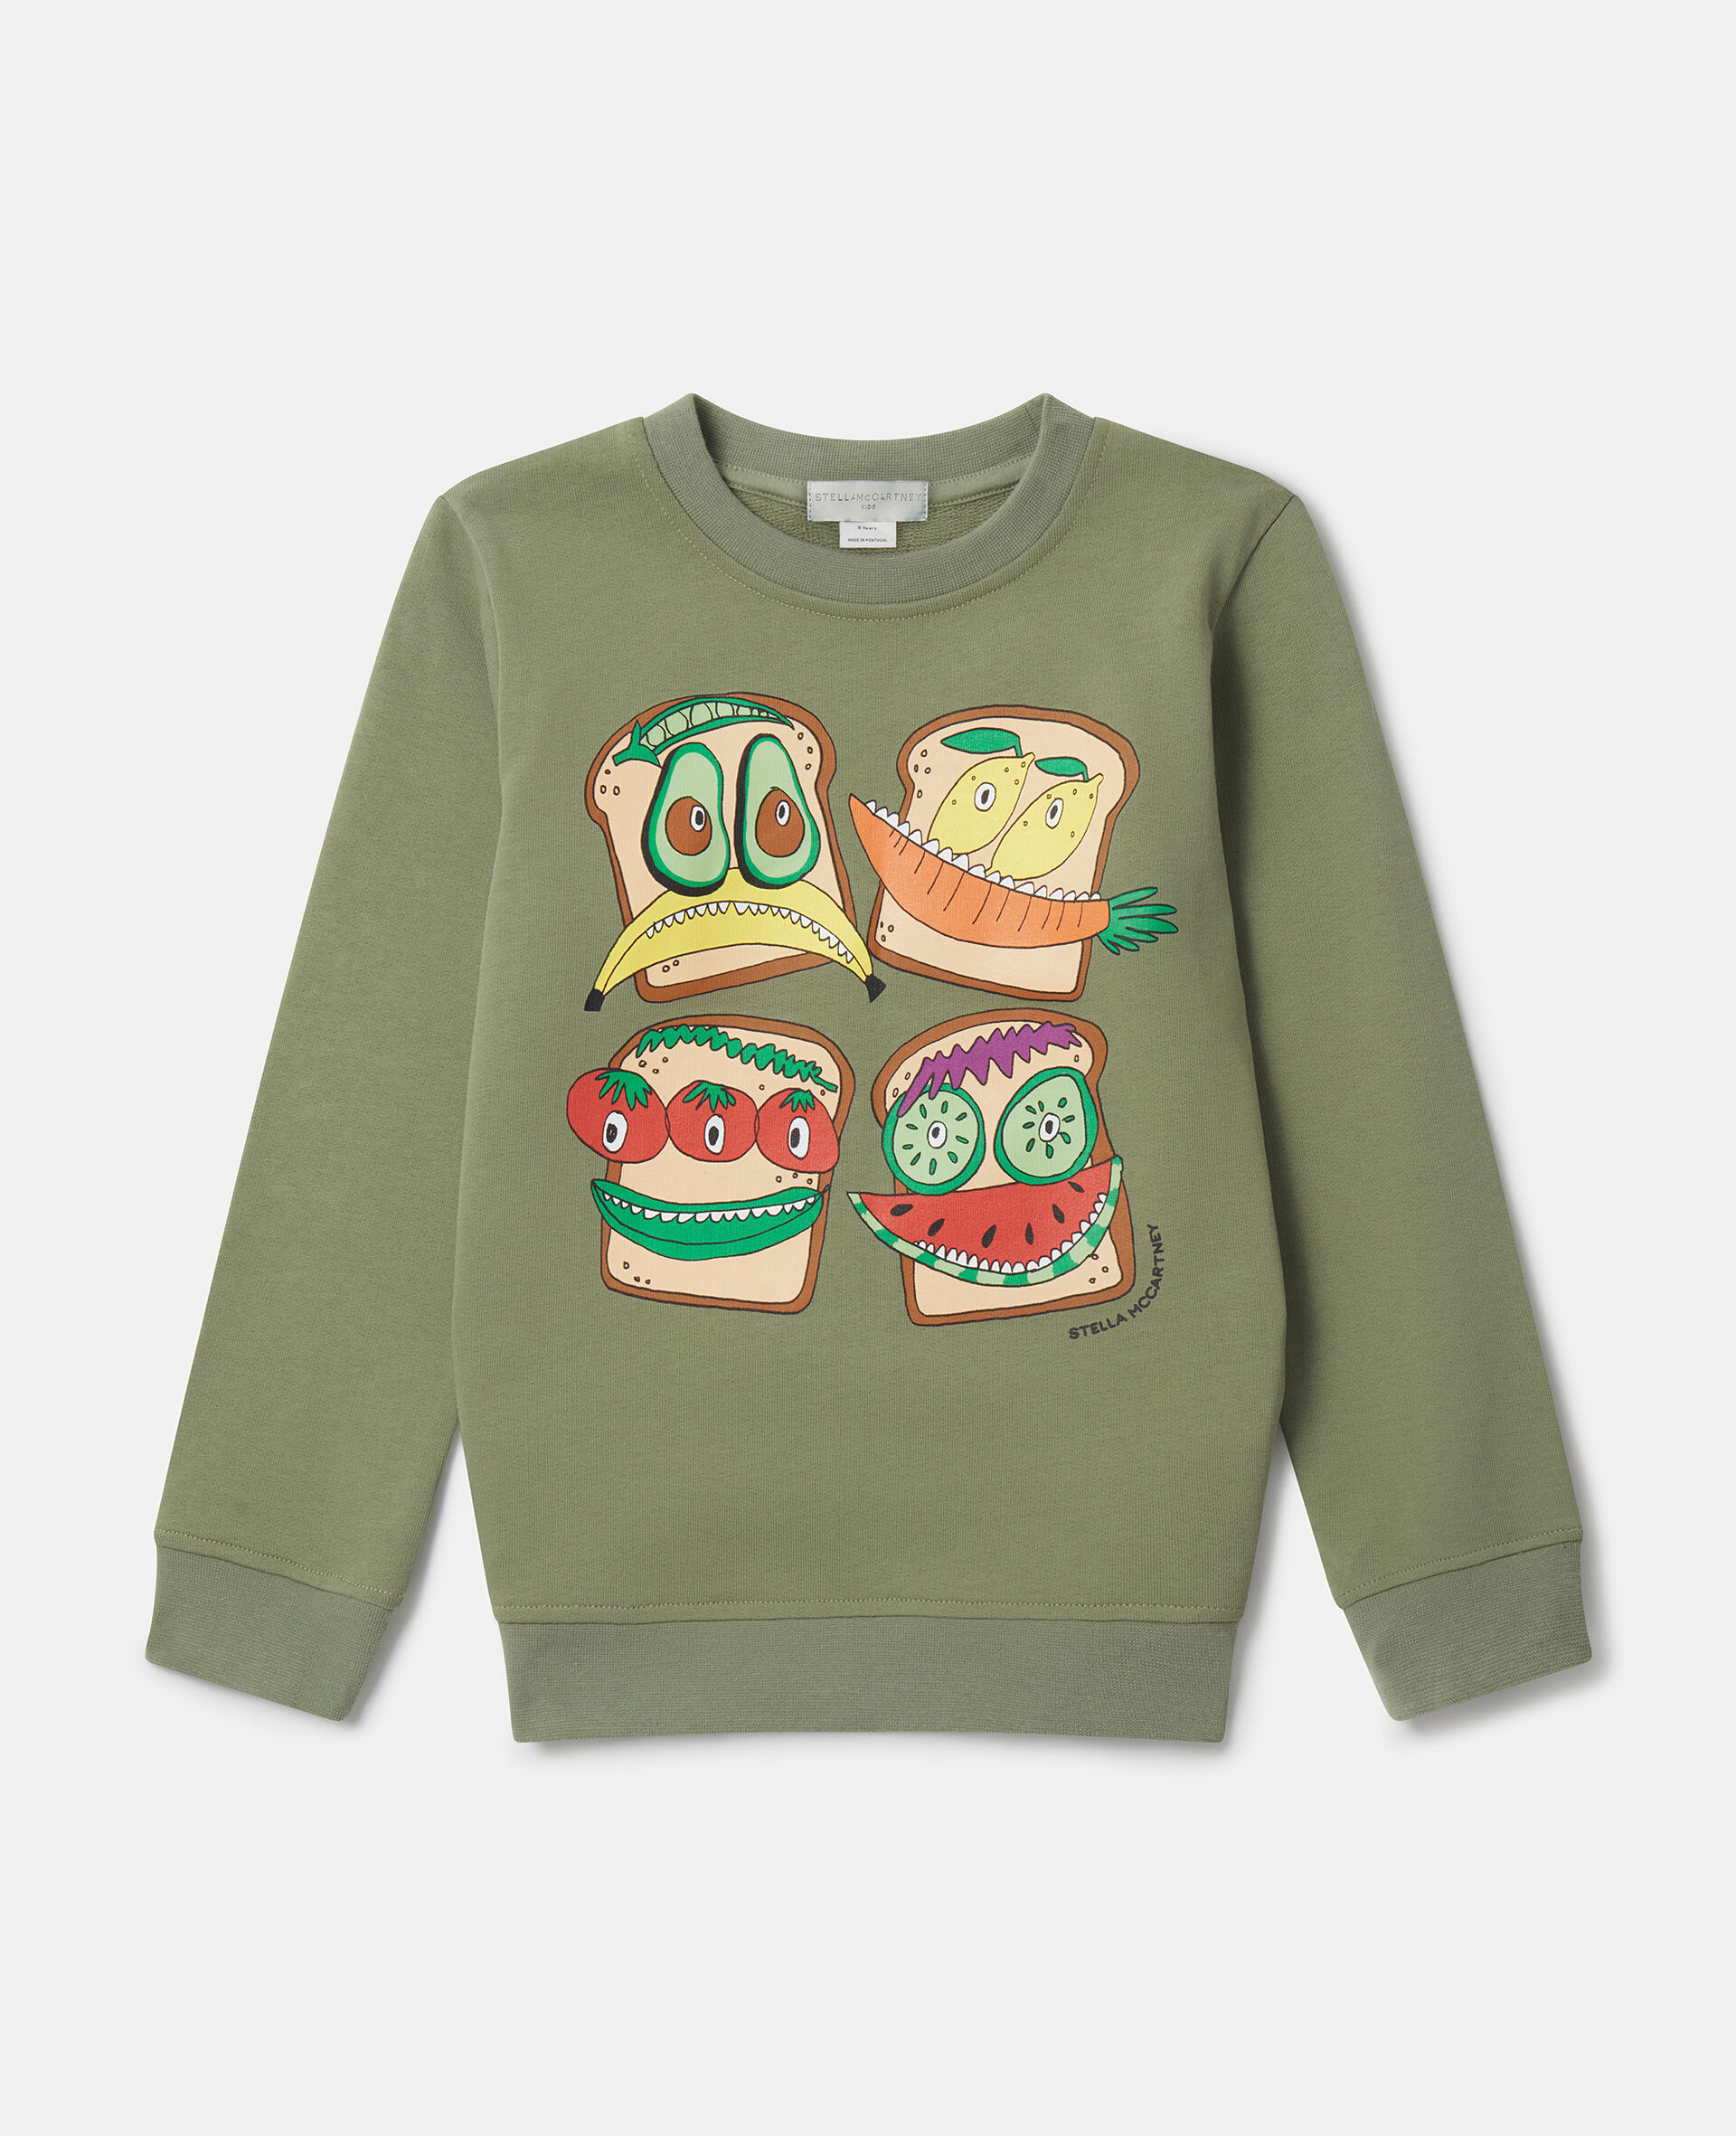 Veggie Sandwich Sweatshirt-Khaki-large image number 0